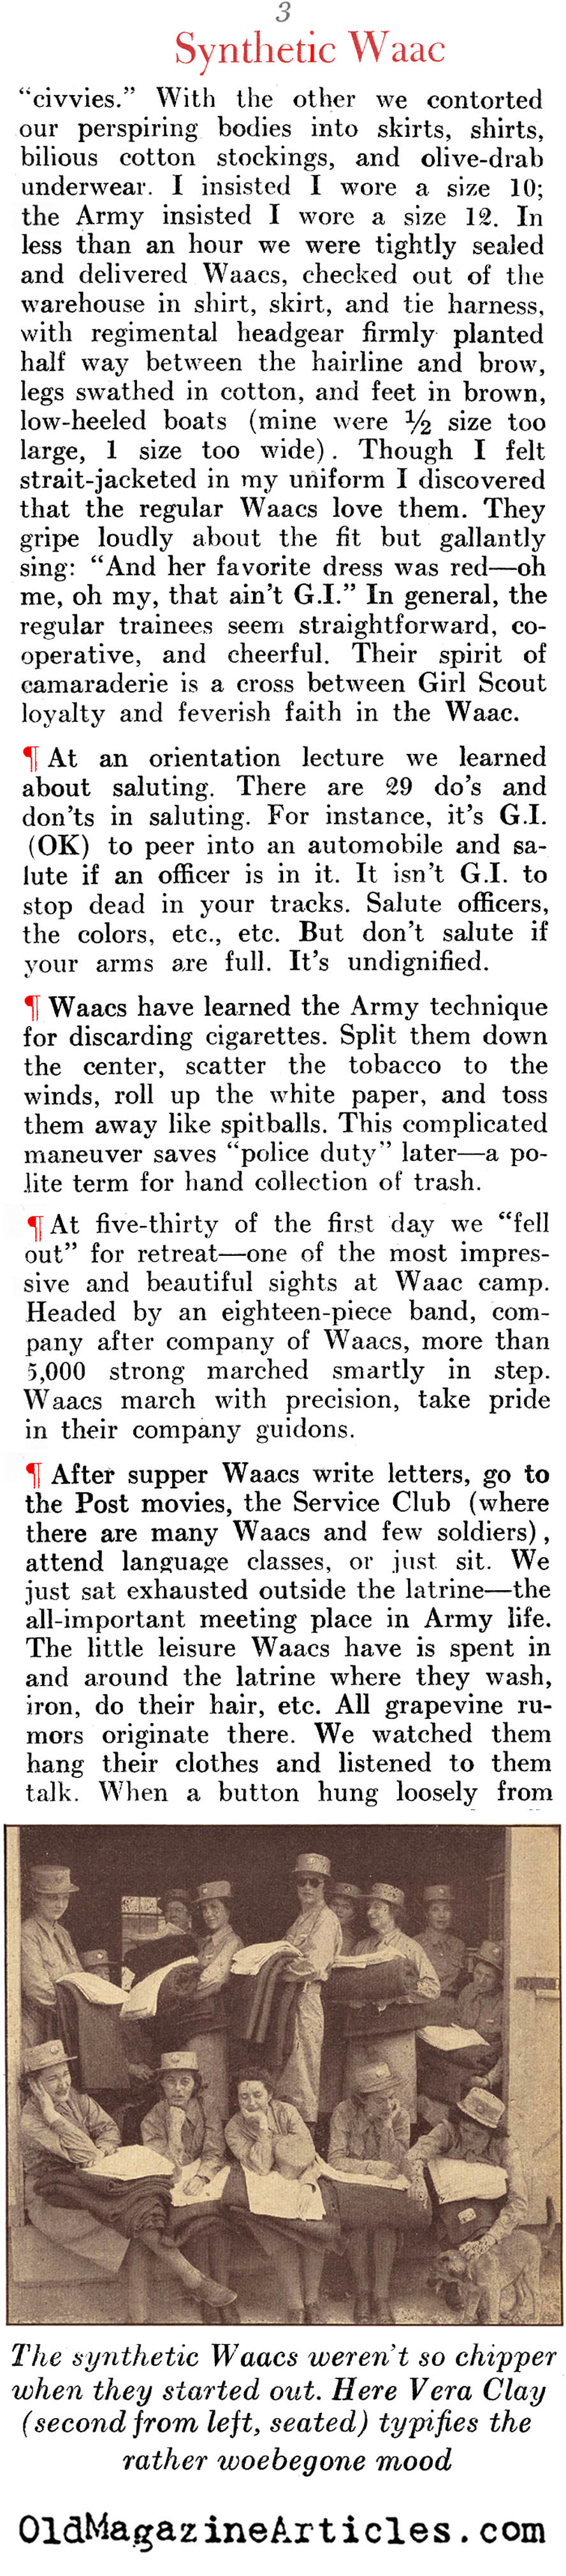 The Reporter was a WAAC (Newsweek Magazine, 1943)